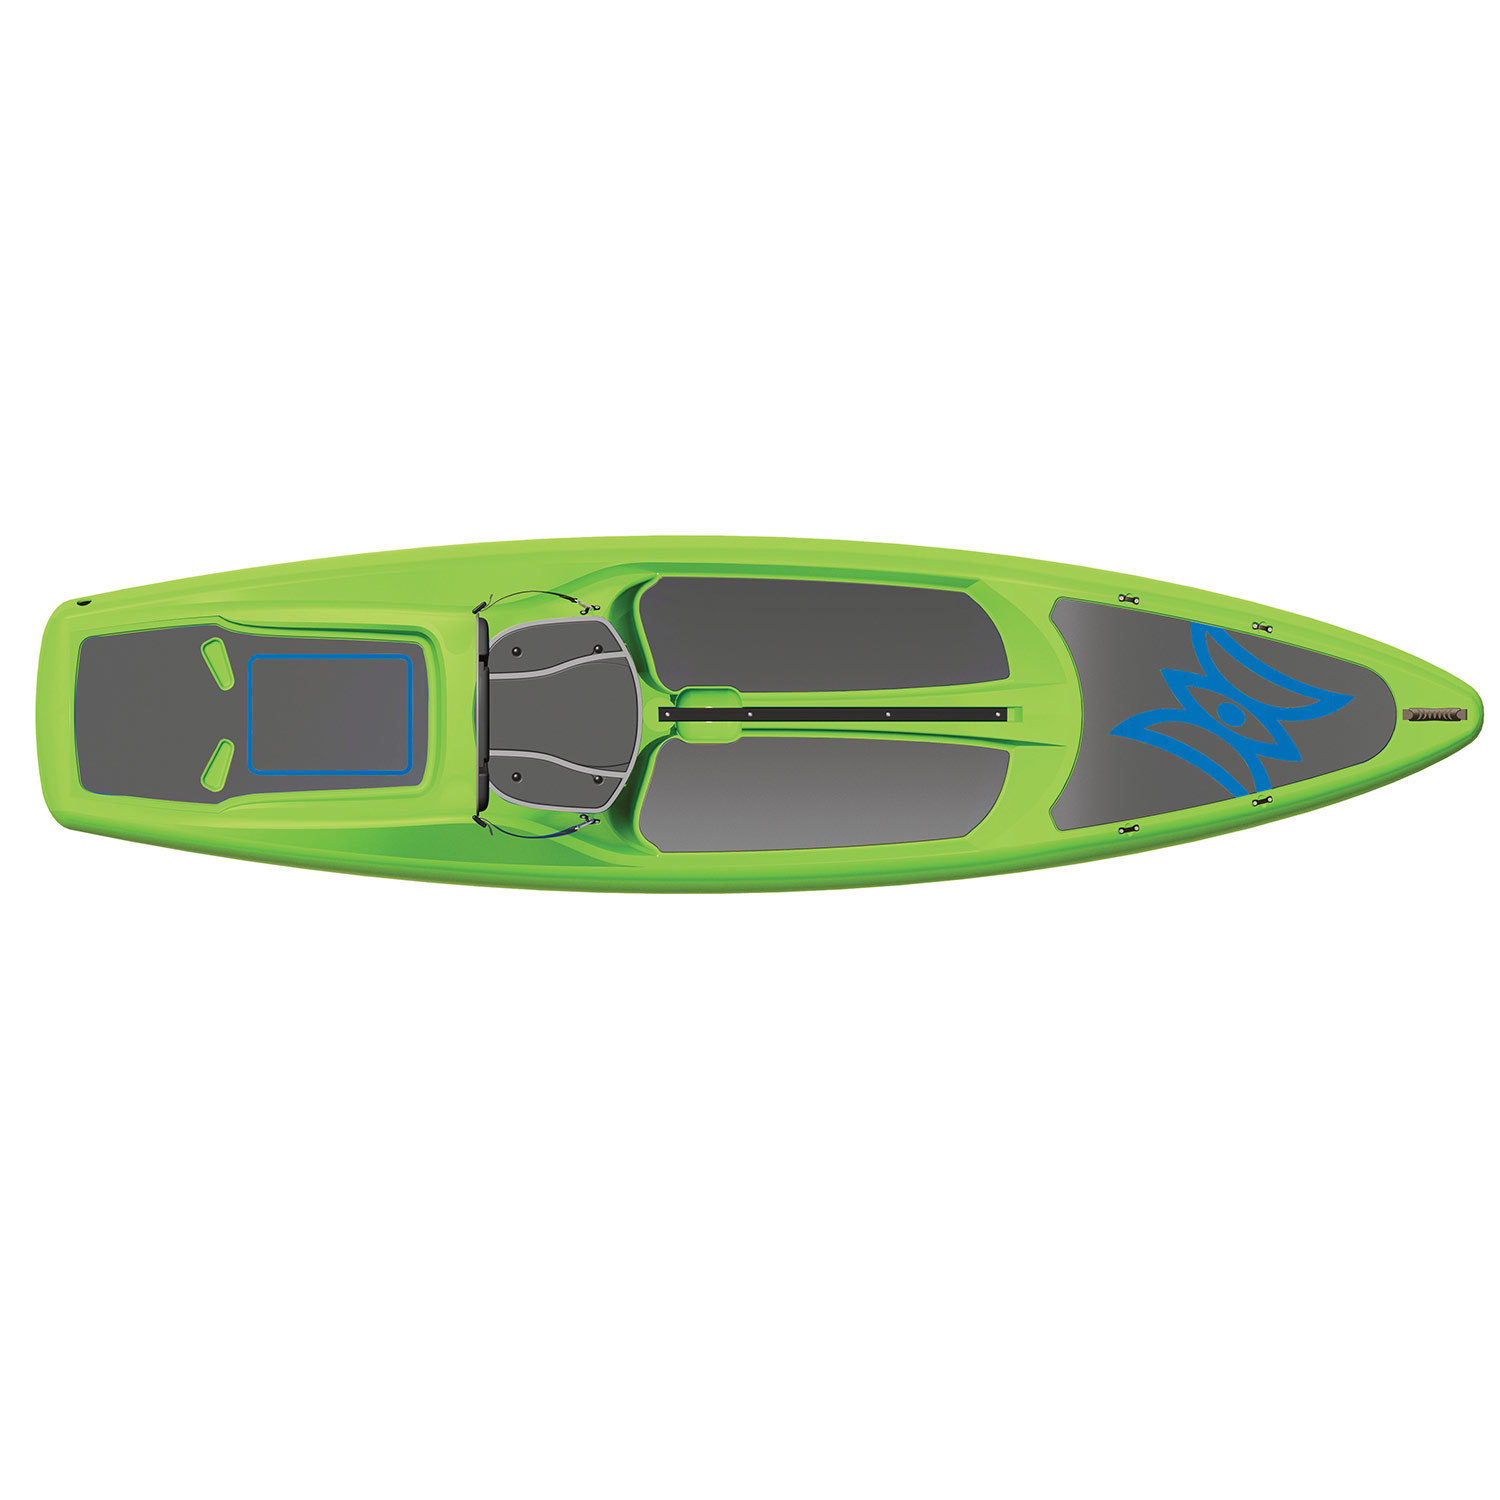 Perception Hi Life 11 Stand-up Paddle Board Kayak - boats - by owner -  marine sale - craigslist